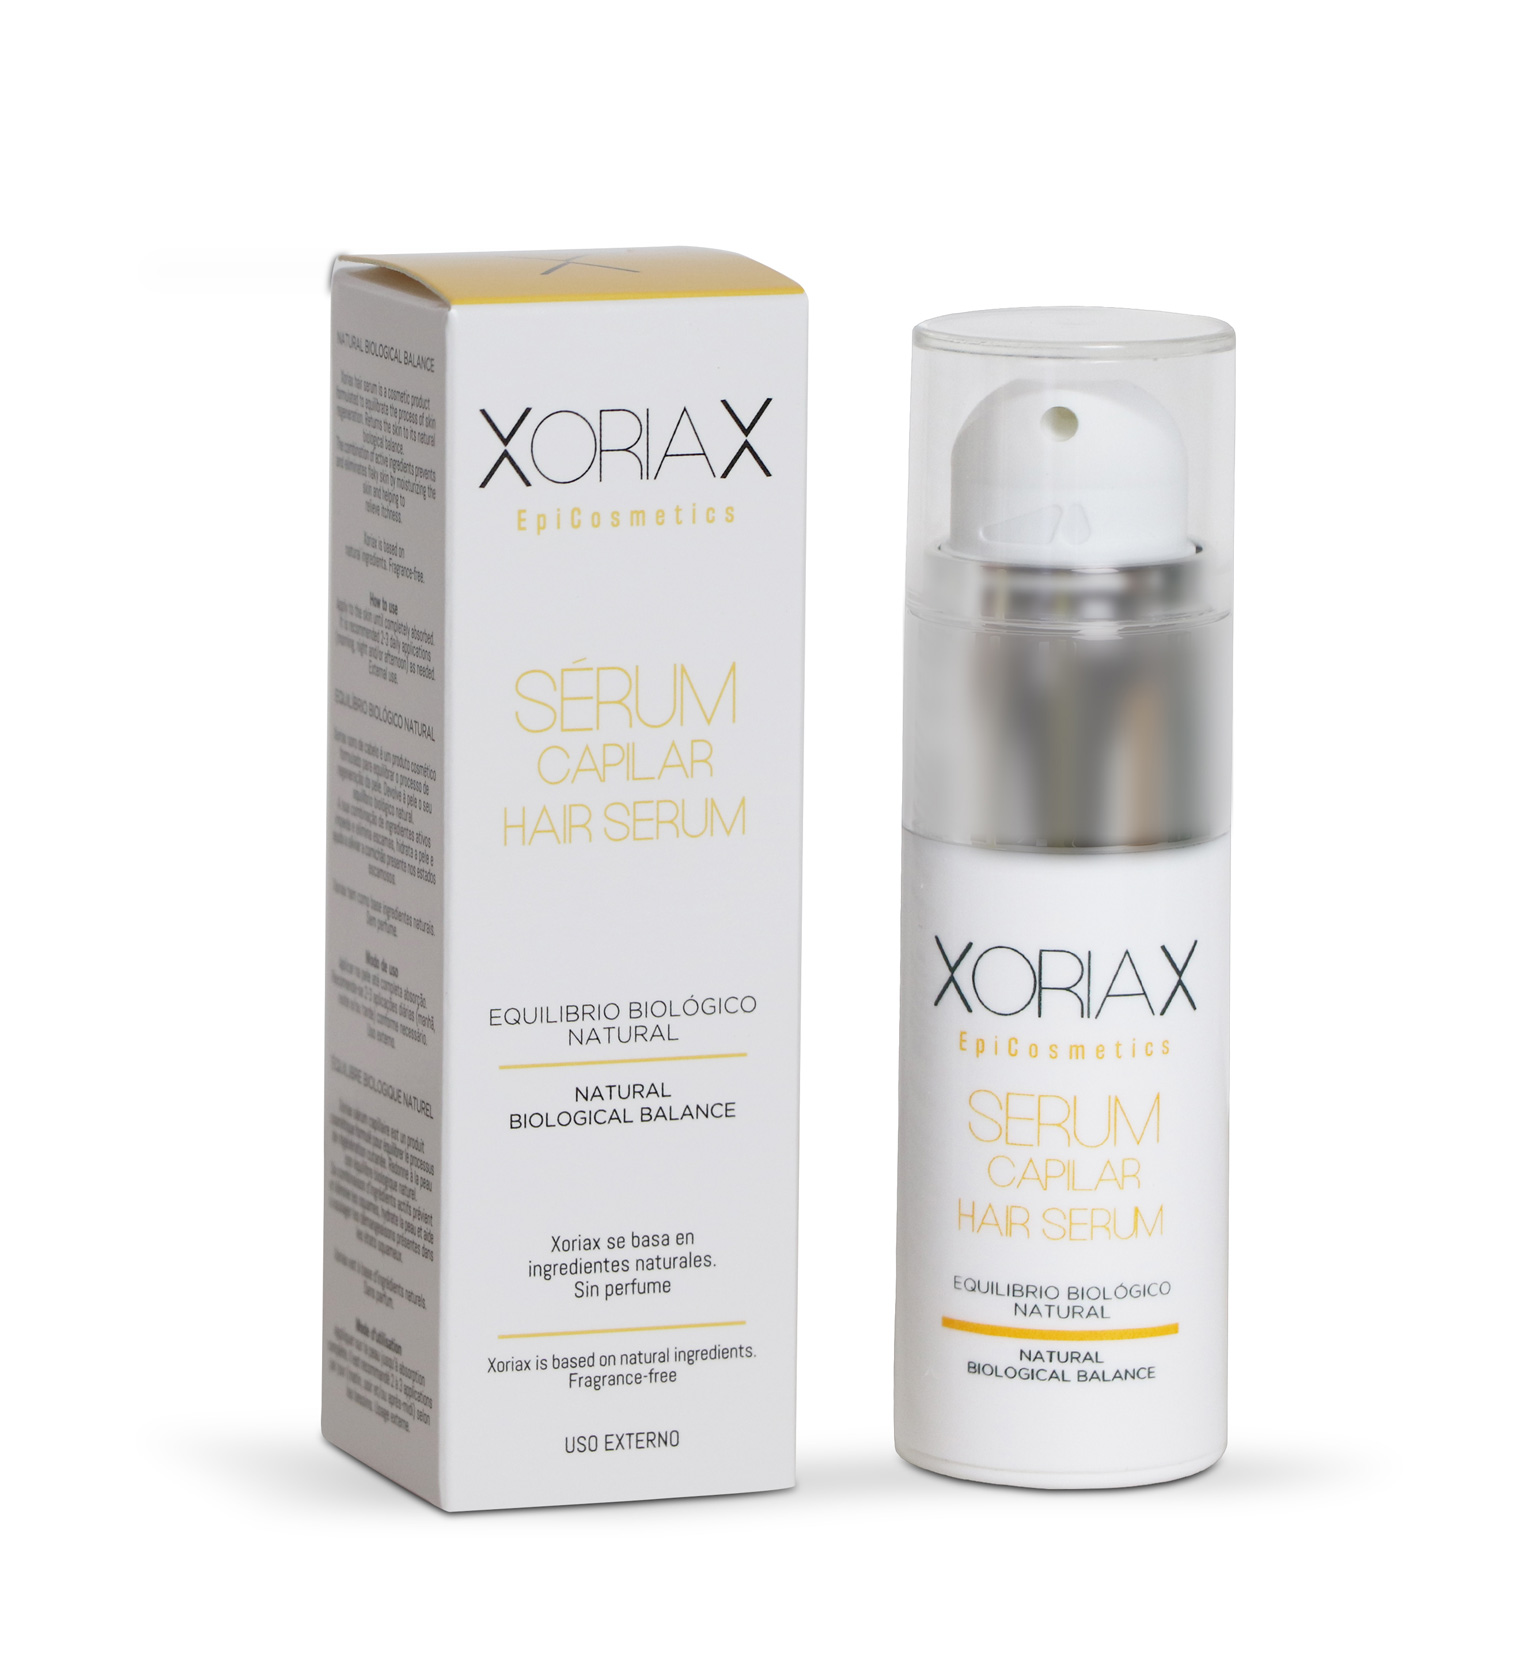 Xoriax EpiCosmetics sérum para el equilibrio biológico natural. 30 ml